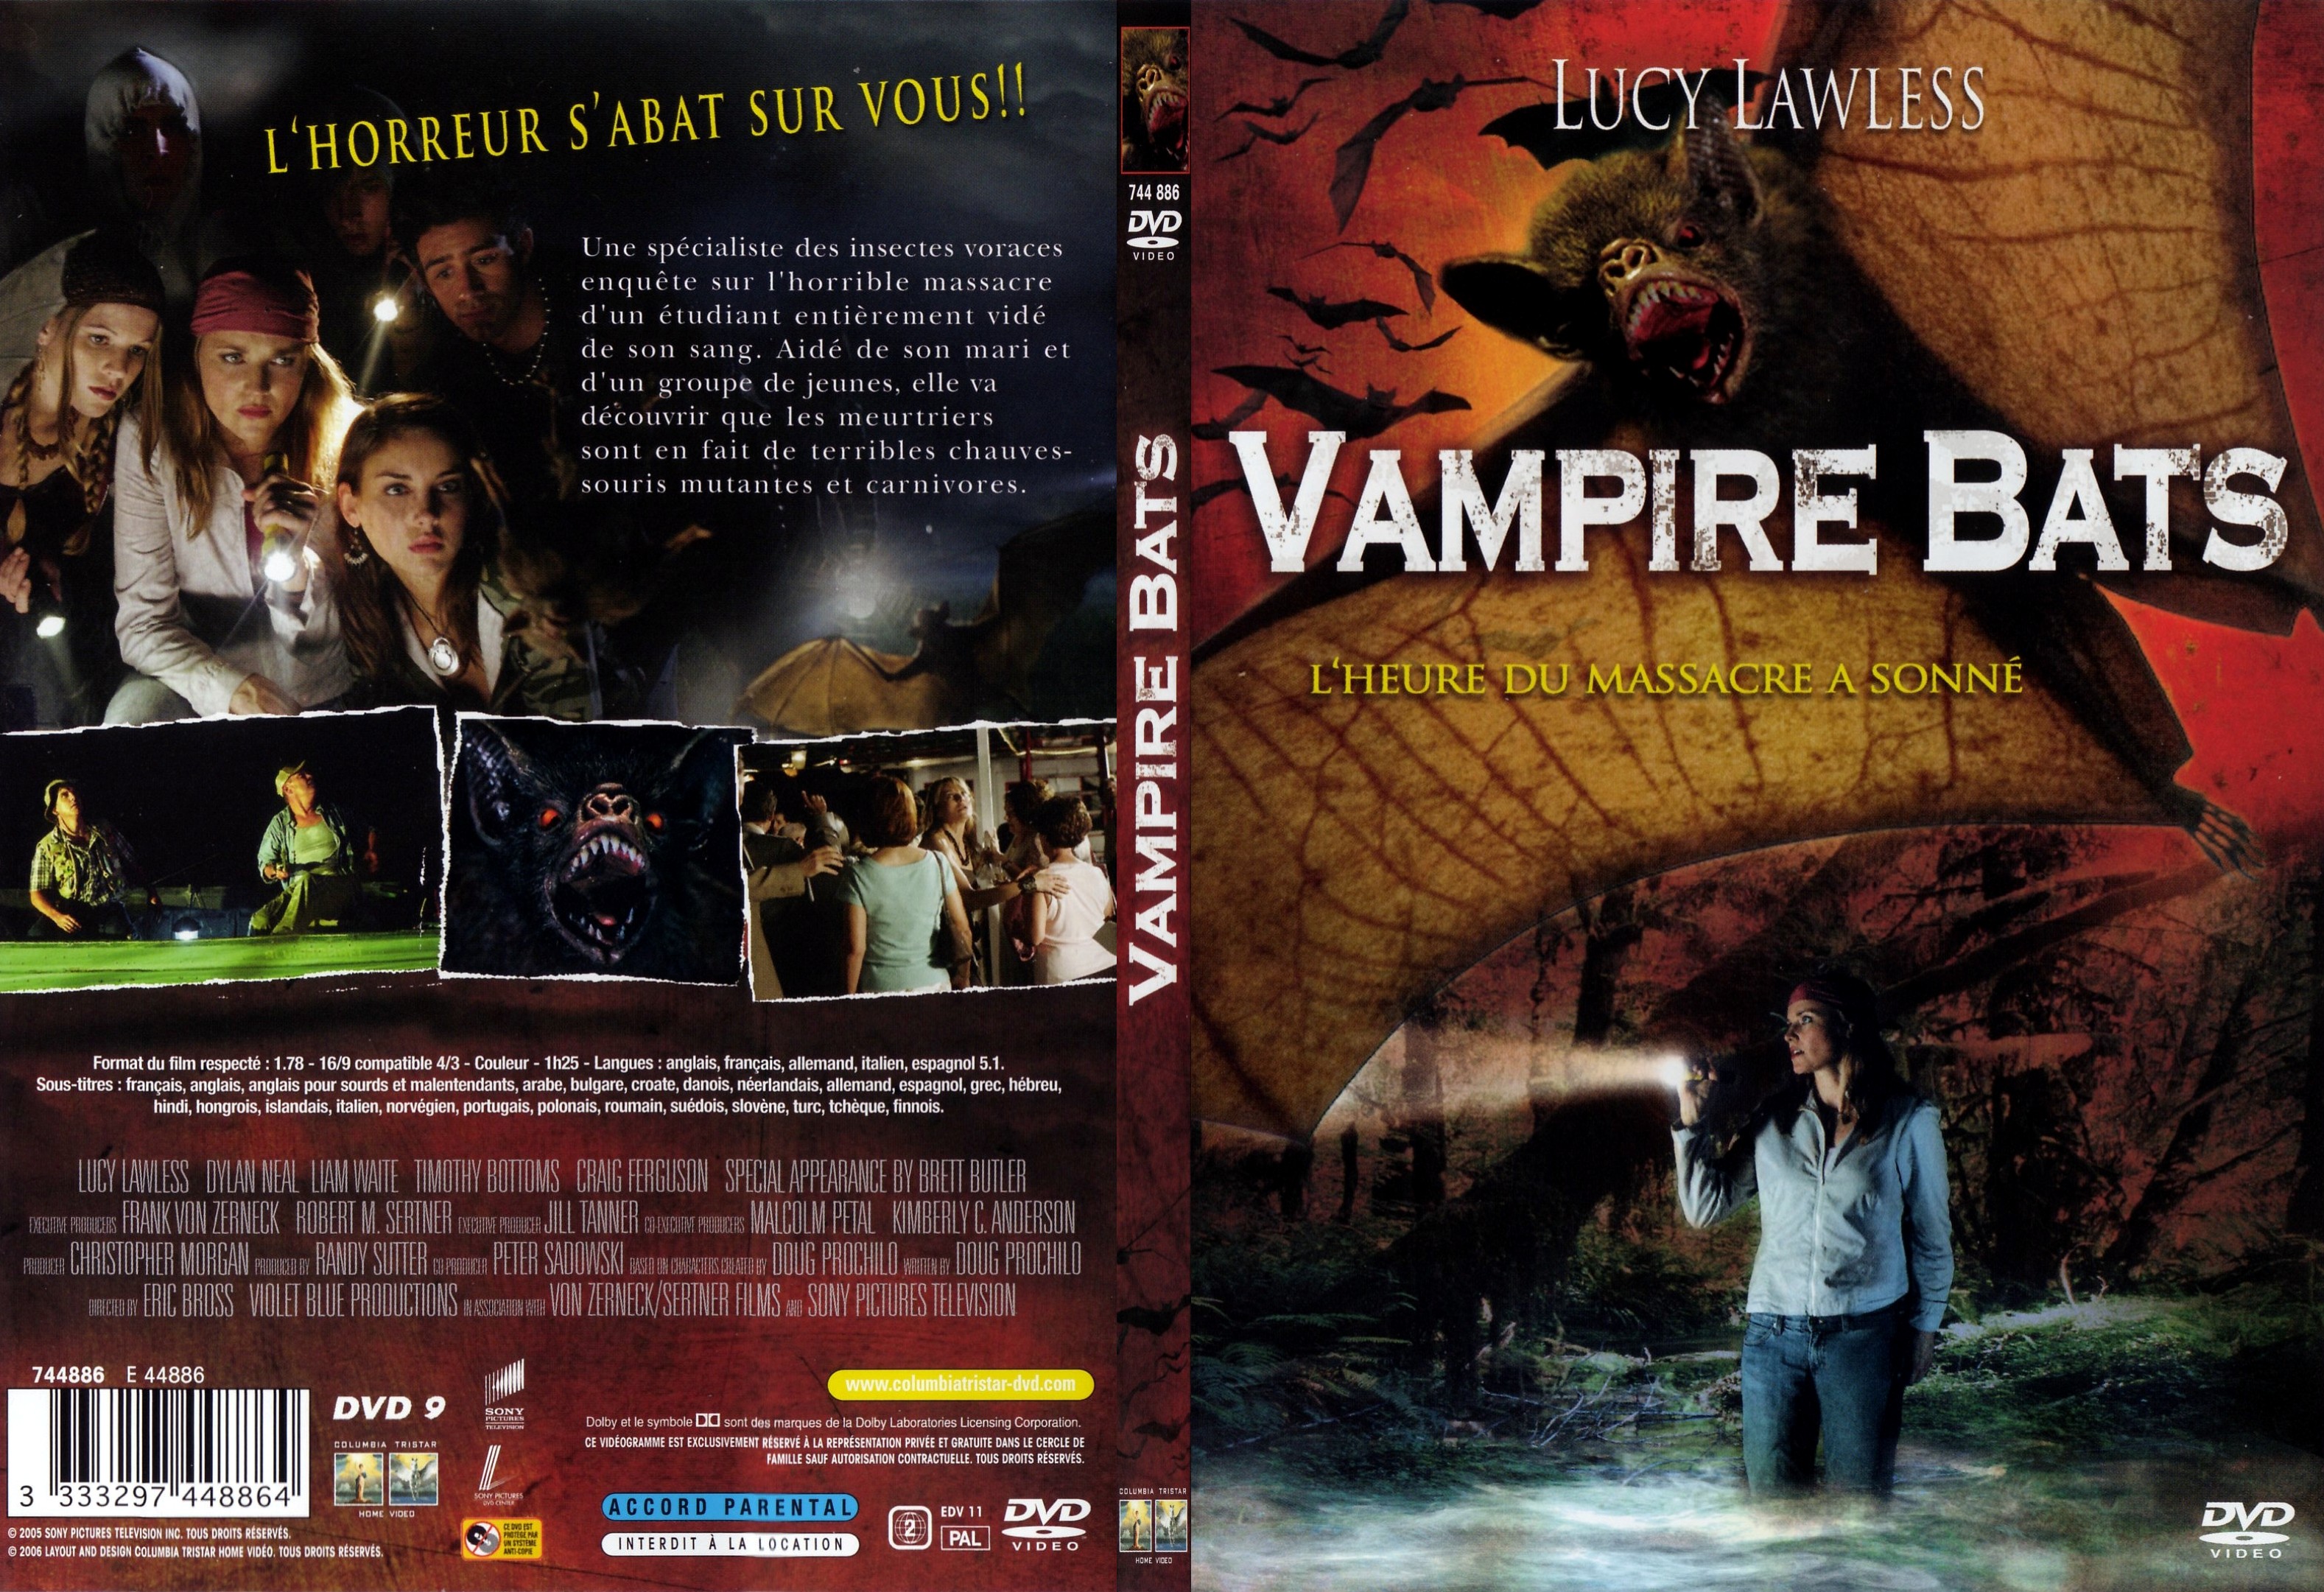 Jaquette DVD Vampire bats - SLIM